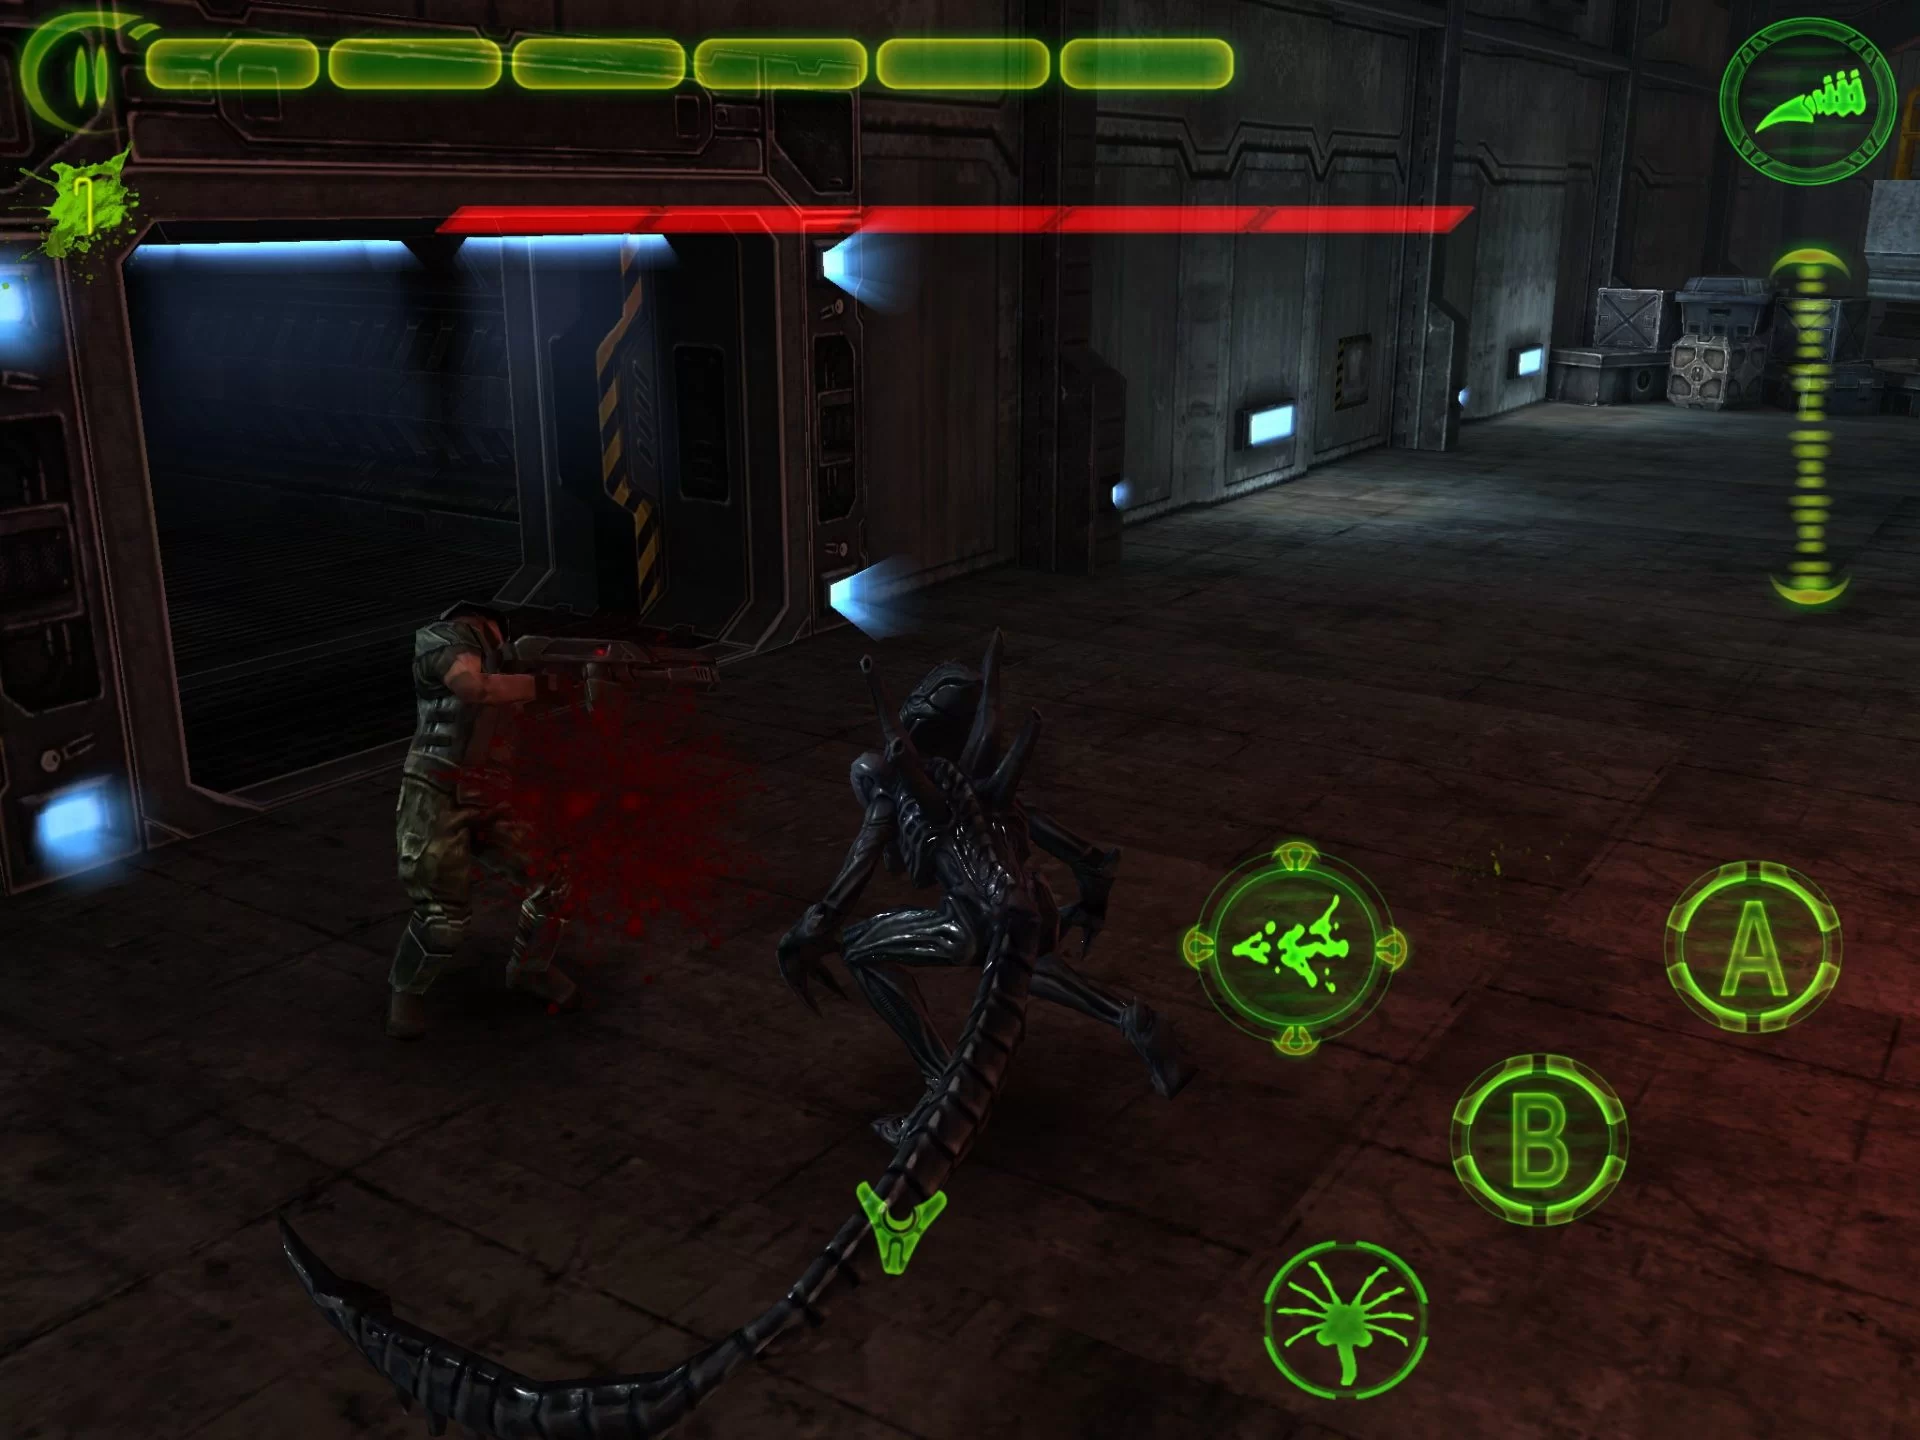 Alien vs. Predator: Evolution hits iOS and Android on Feb. 28 - Polygon